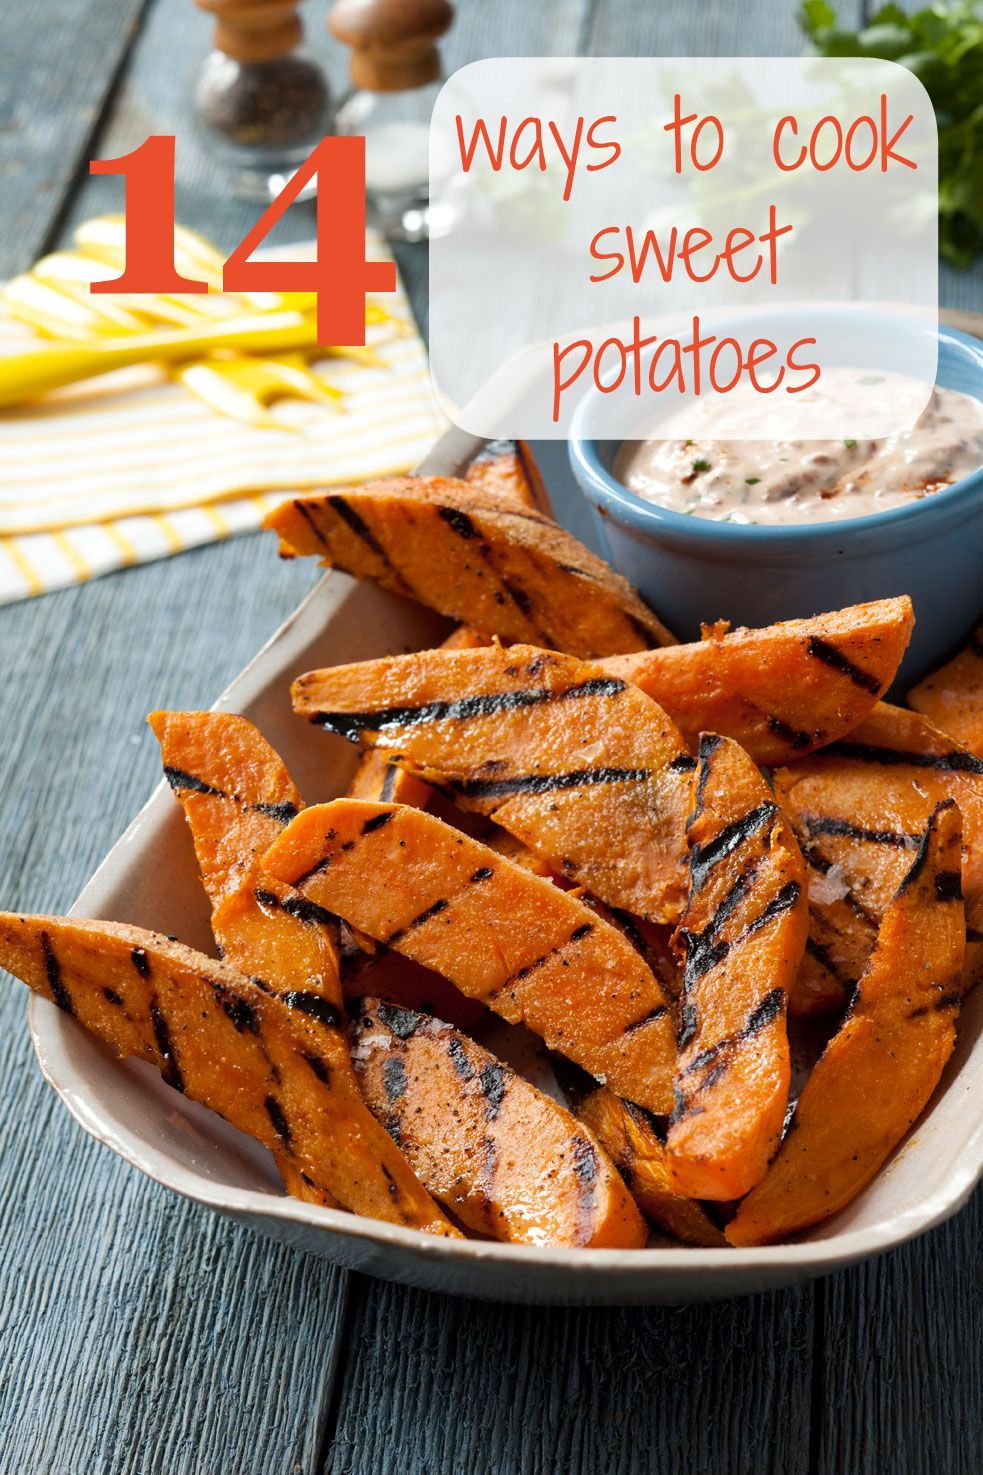 Sweet potato recipes: 14 easy and inexpensive ways to cook sweet potatoes